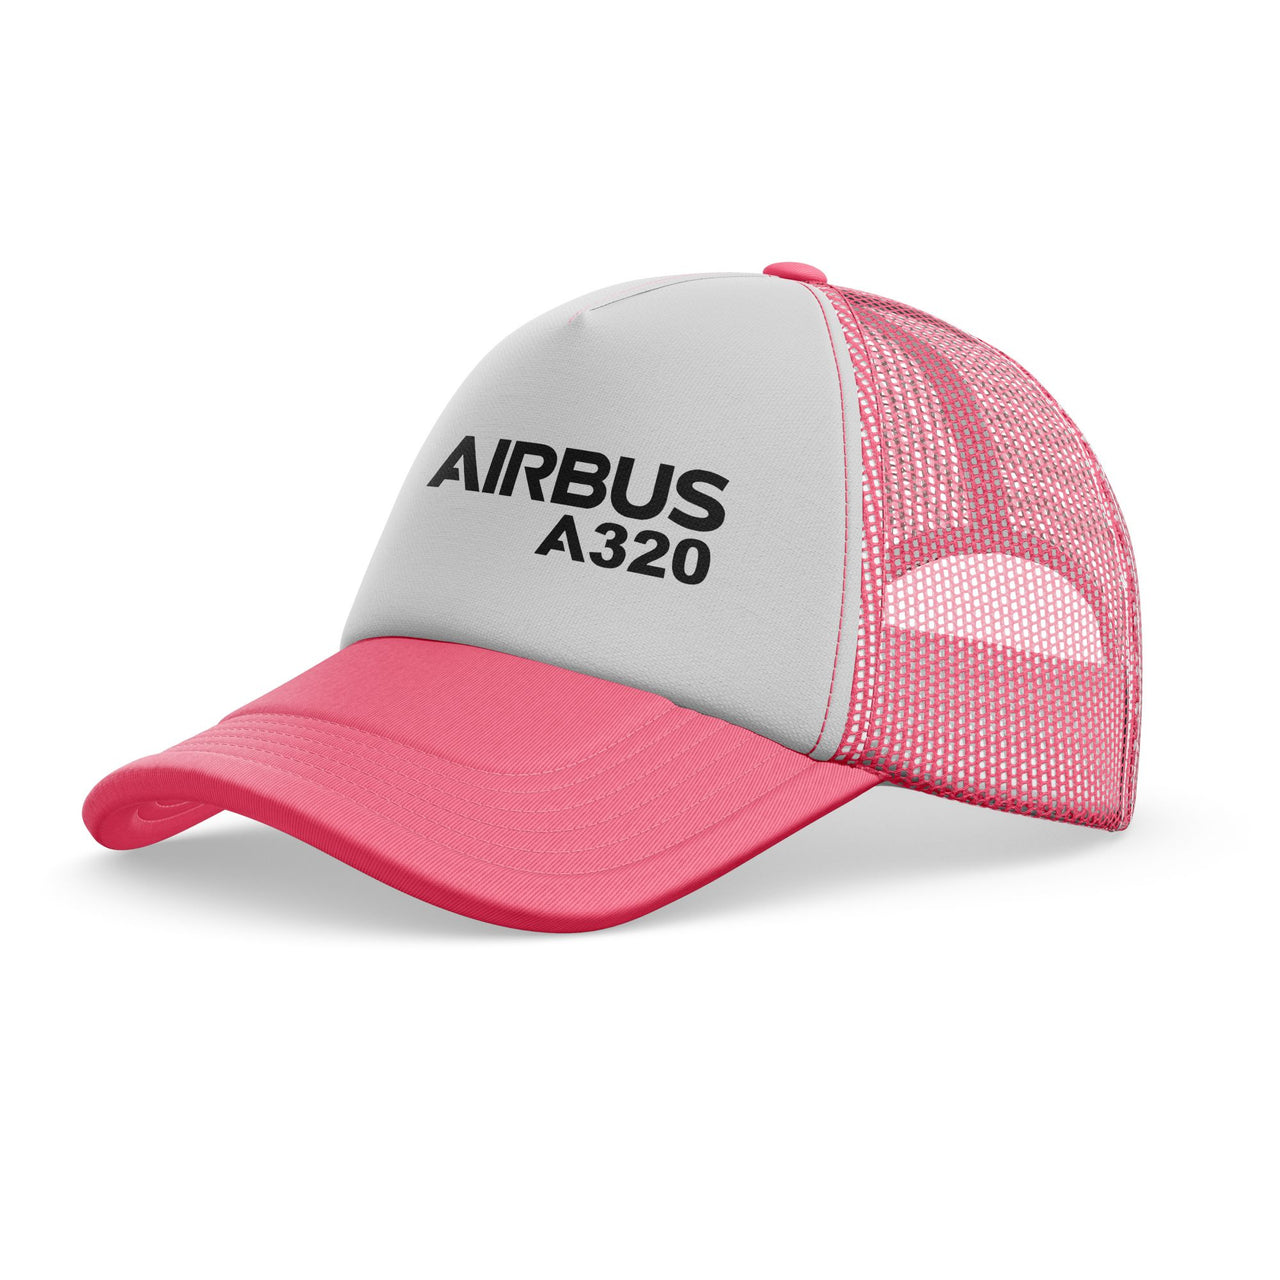 Airbus A320 & Text Designed Trucker Caps & Hats